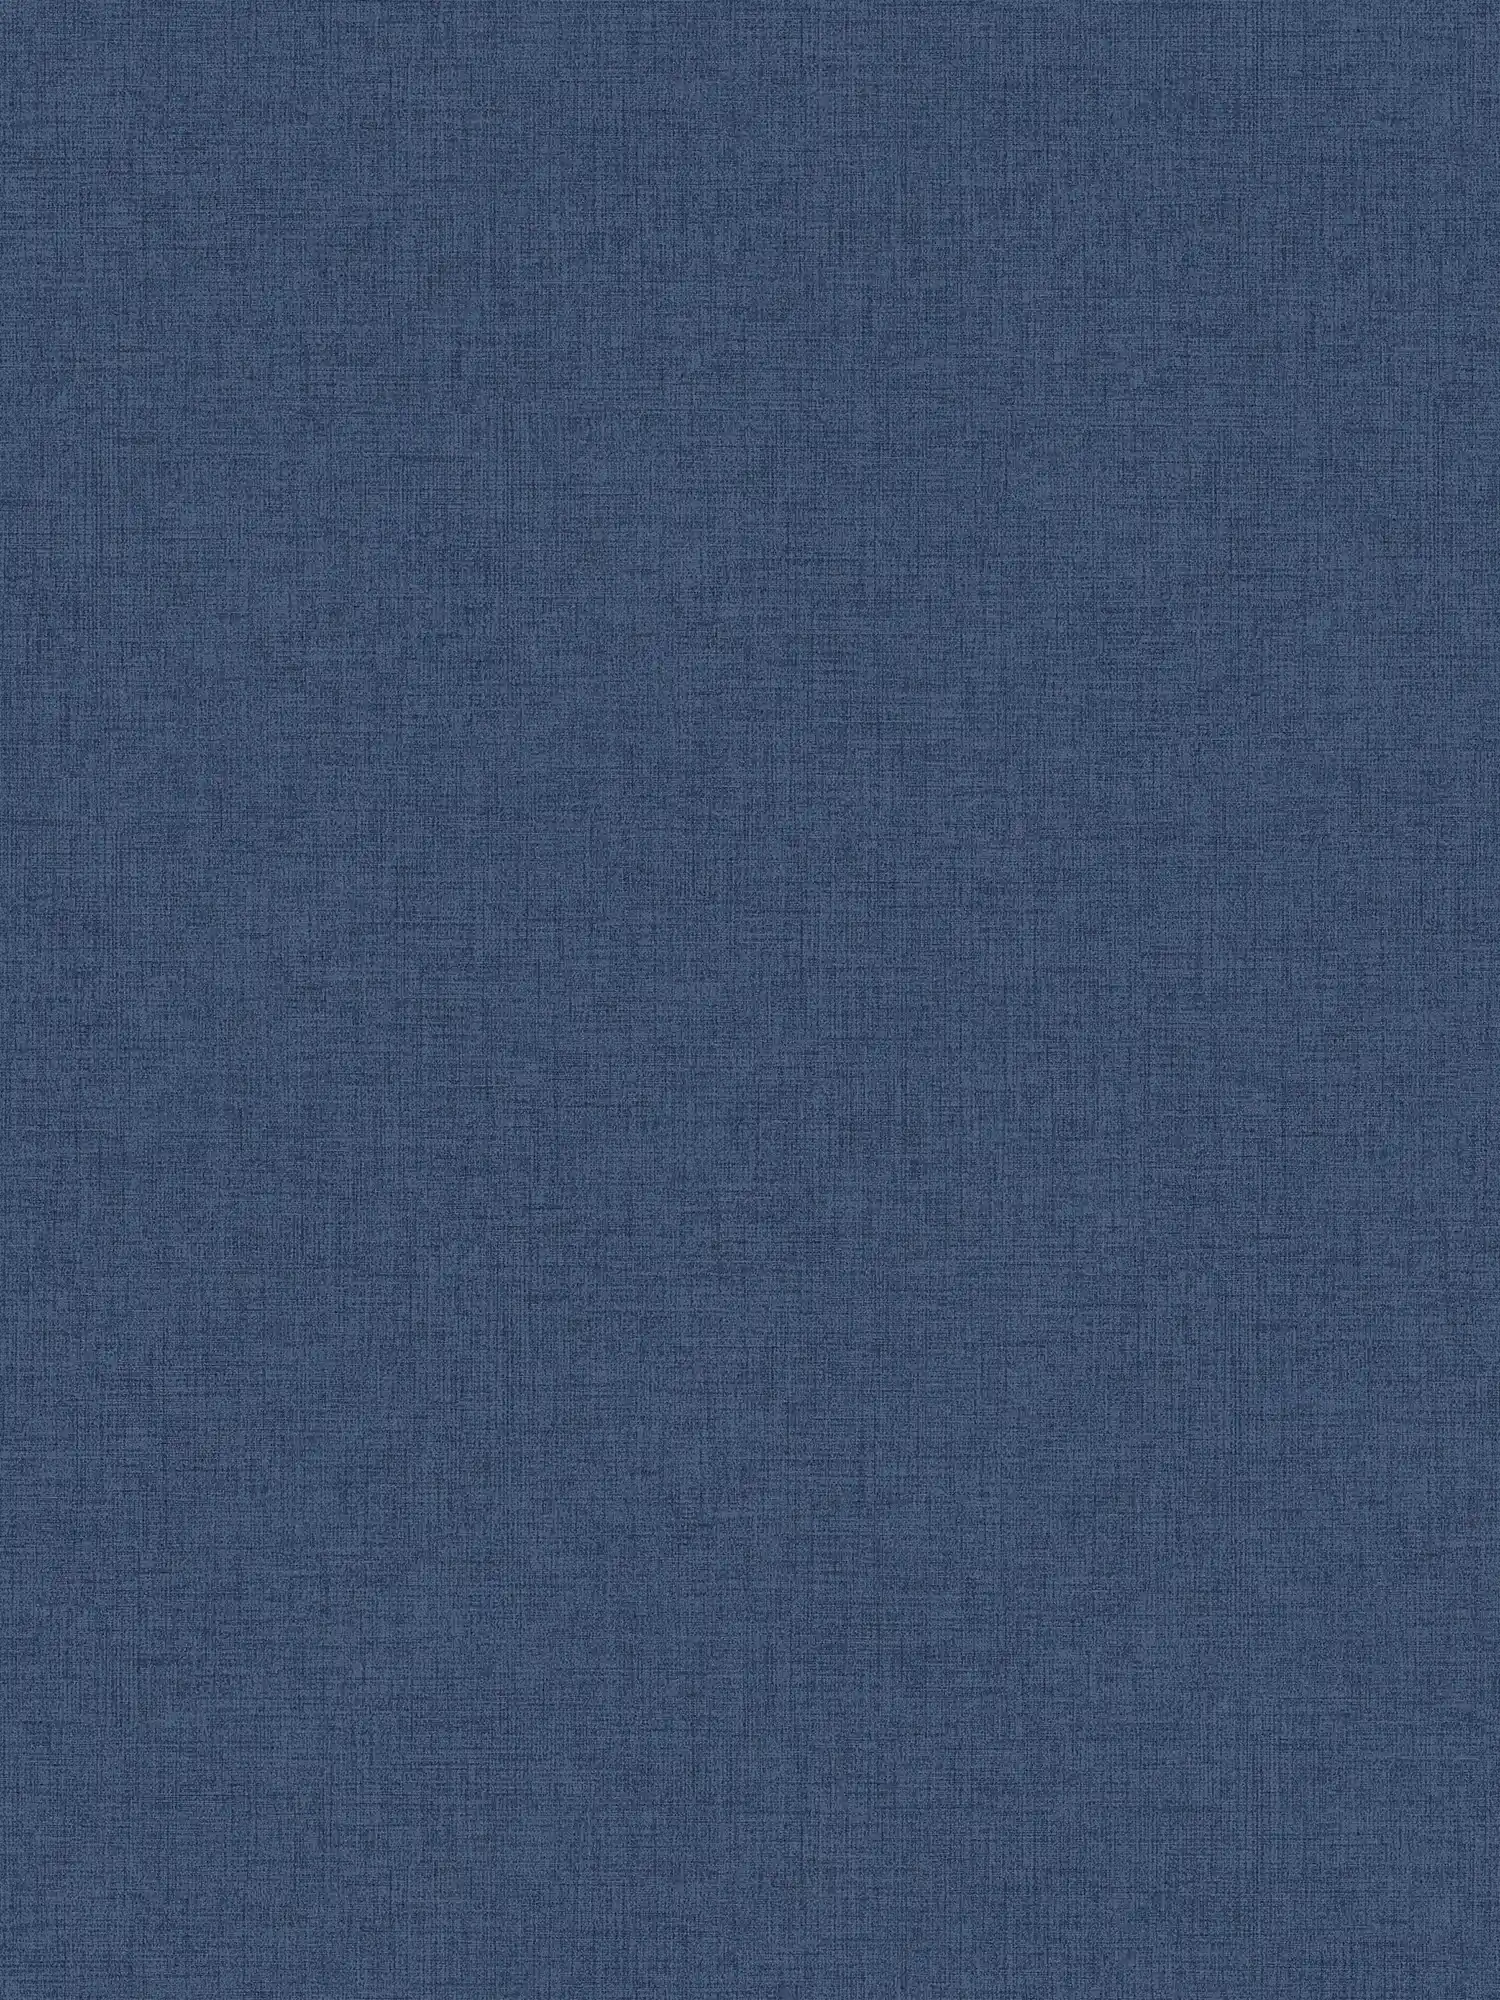         Marineblau Tapete mit Leinen-Optik, Navy – Blau
    